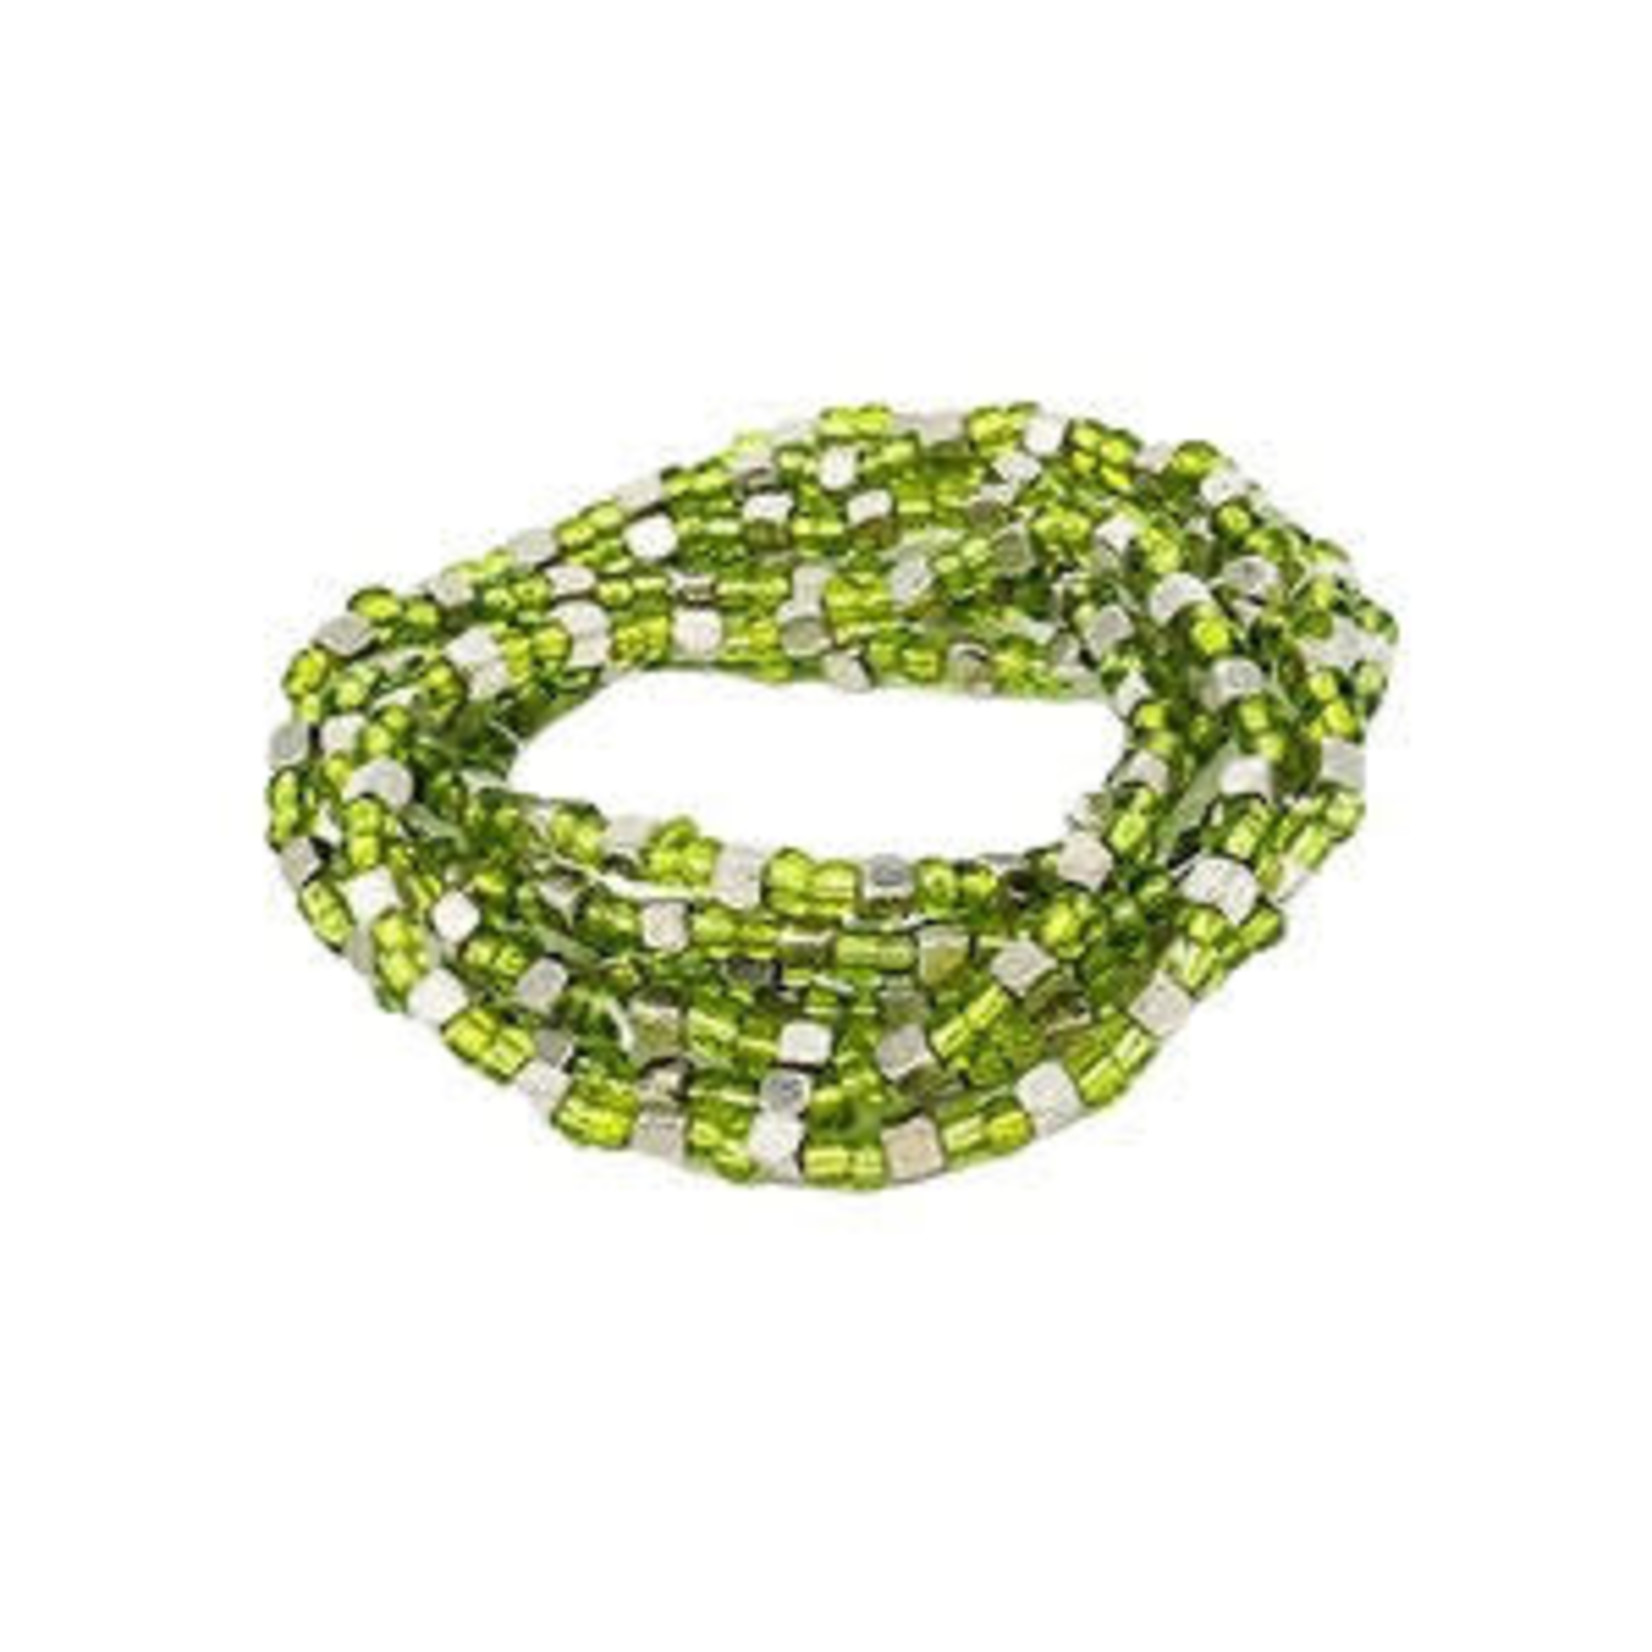 Brass Bead Stacker Stretch Bracelet, Pack of 7 Green